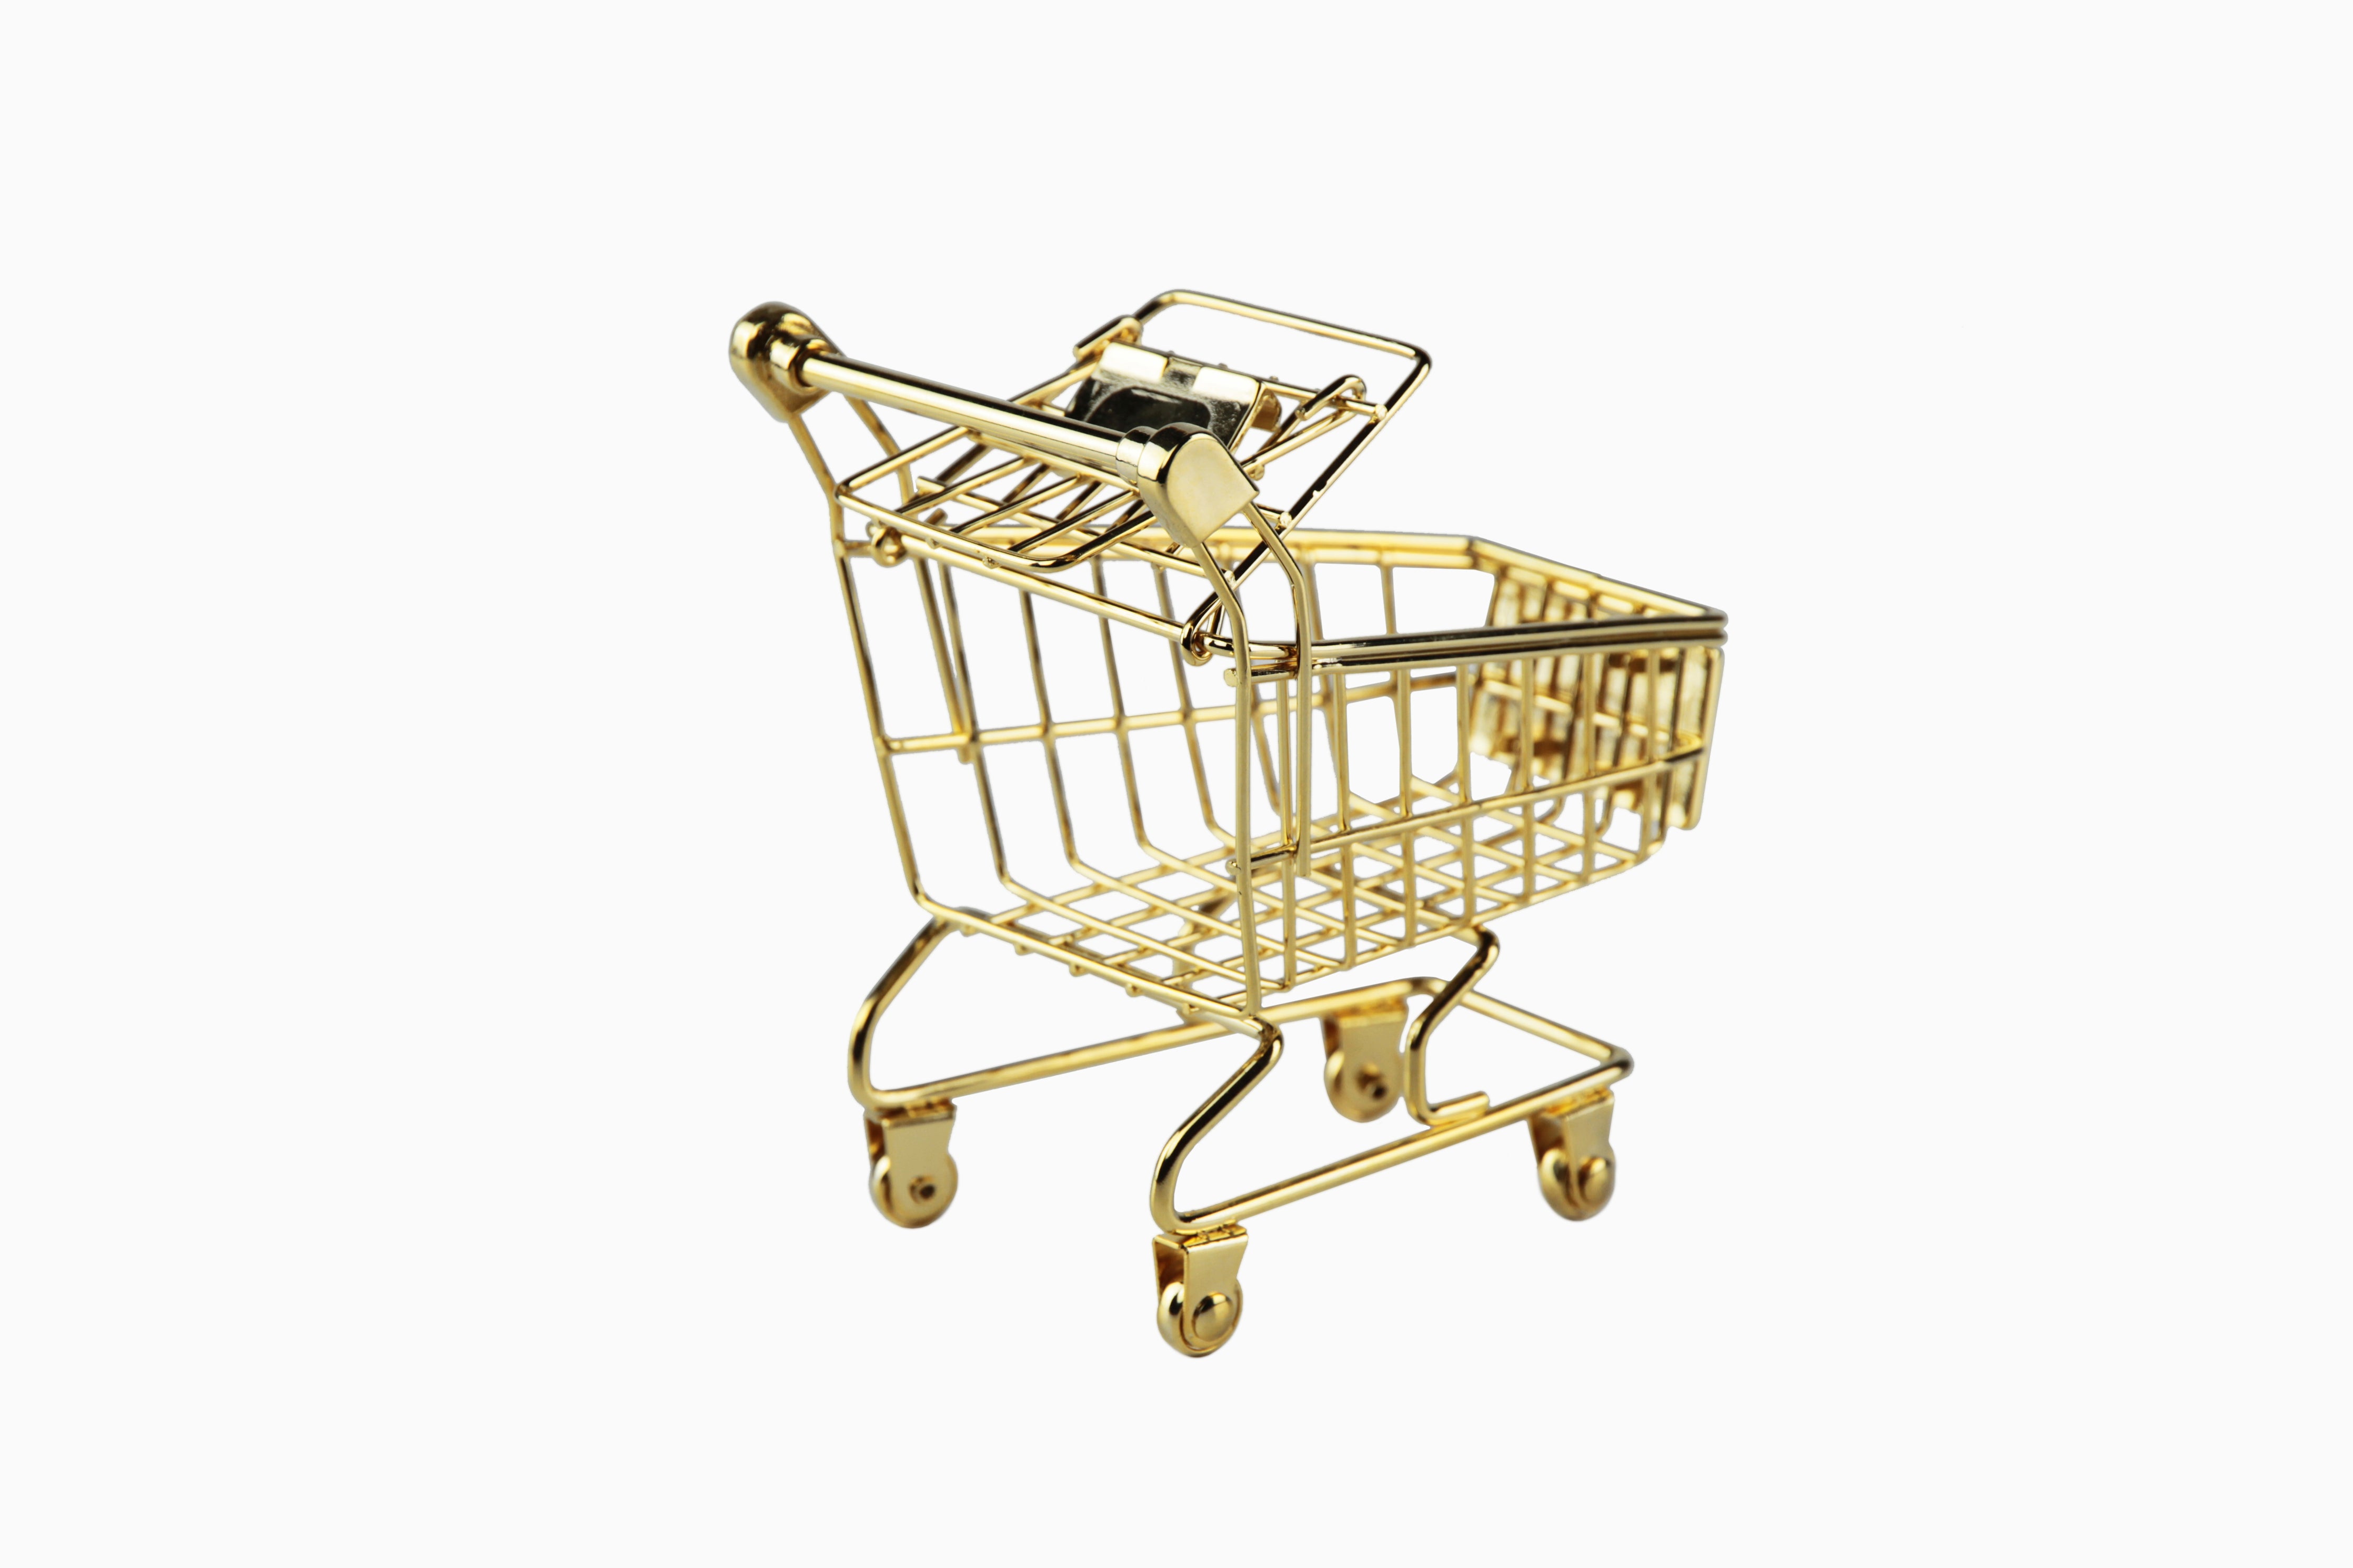 The Gold Cart